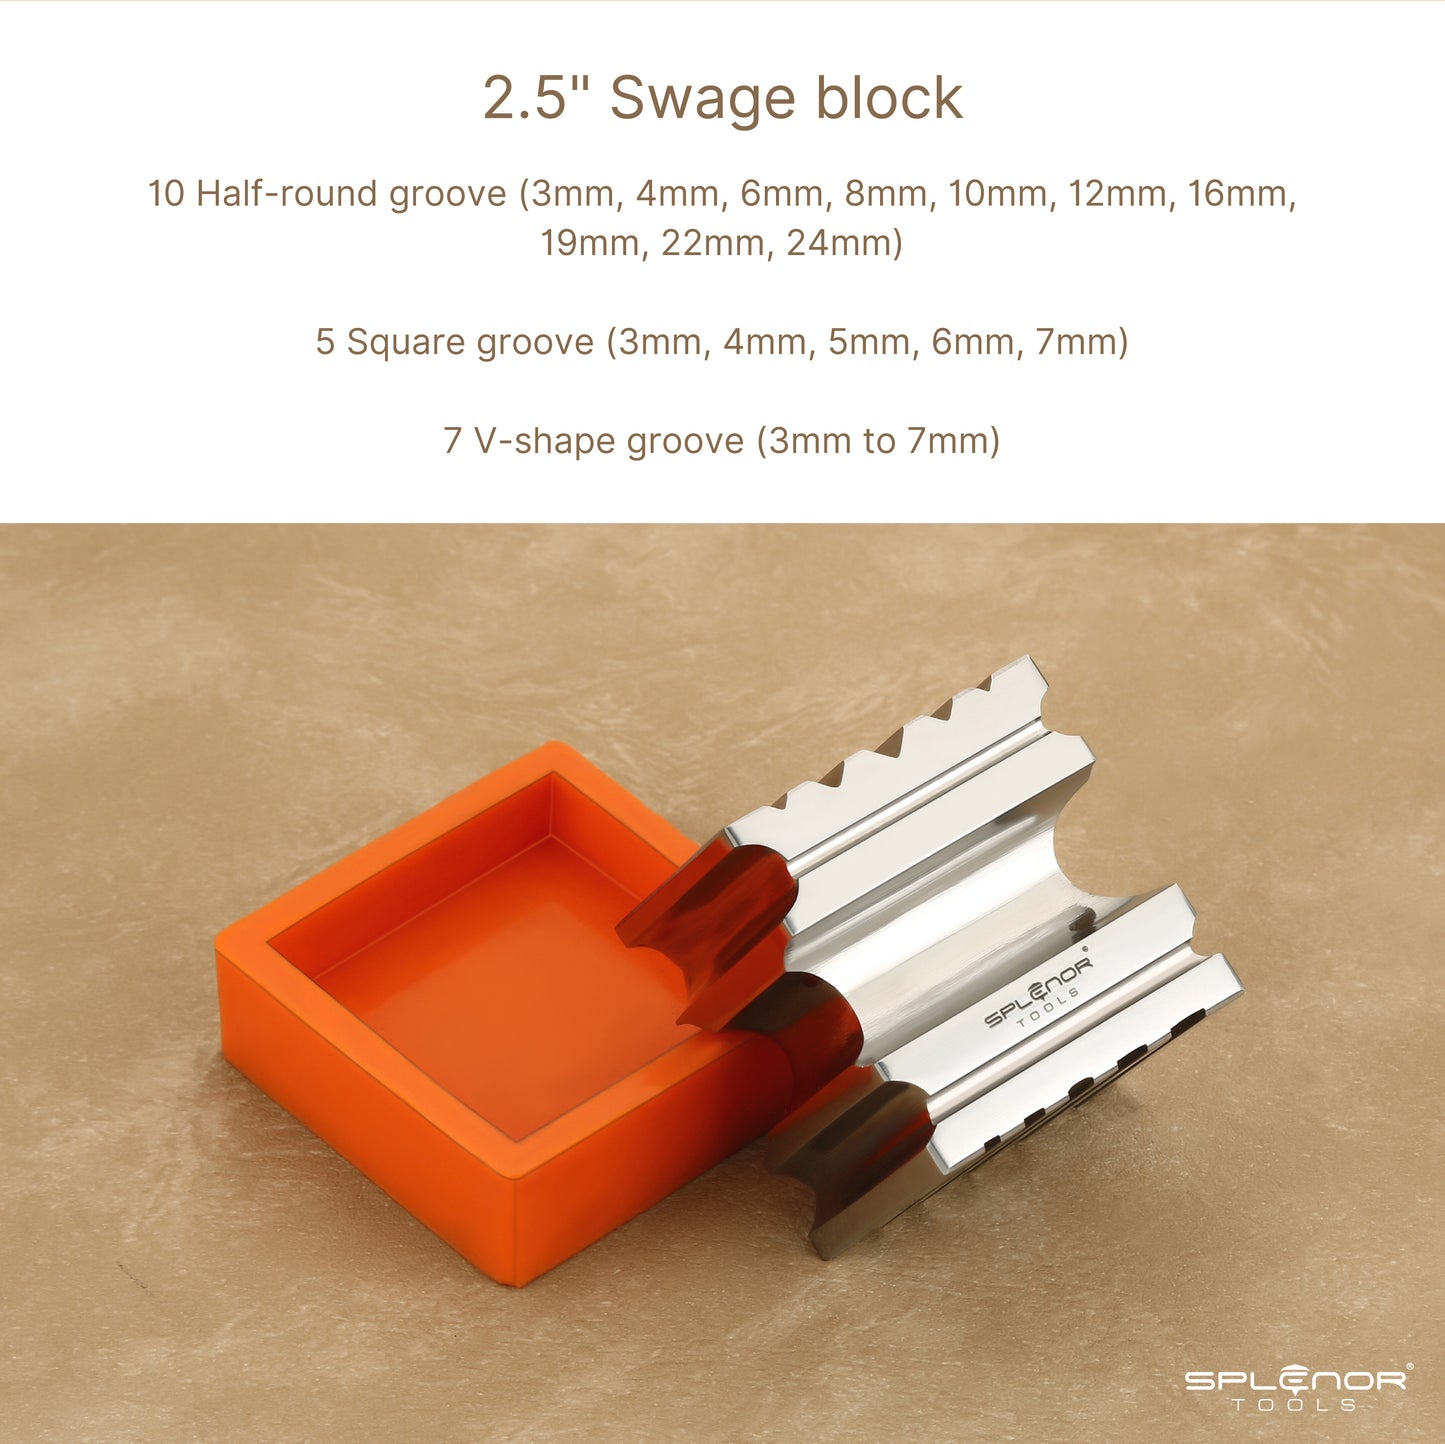 2.5" Swage block